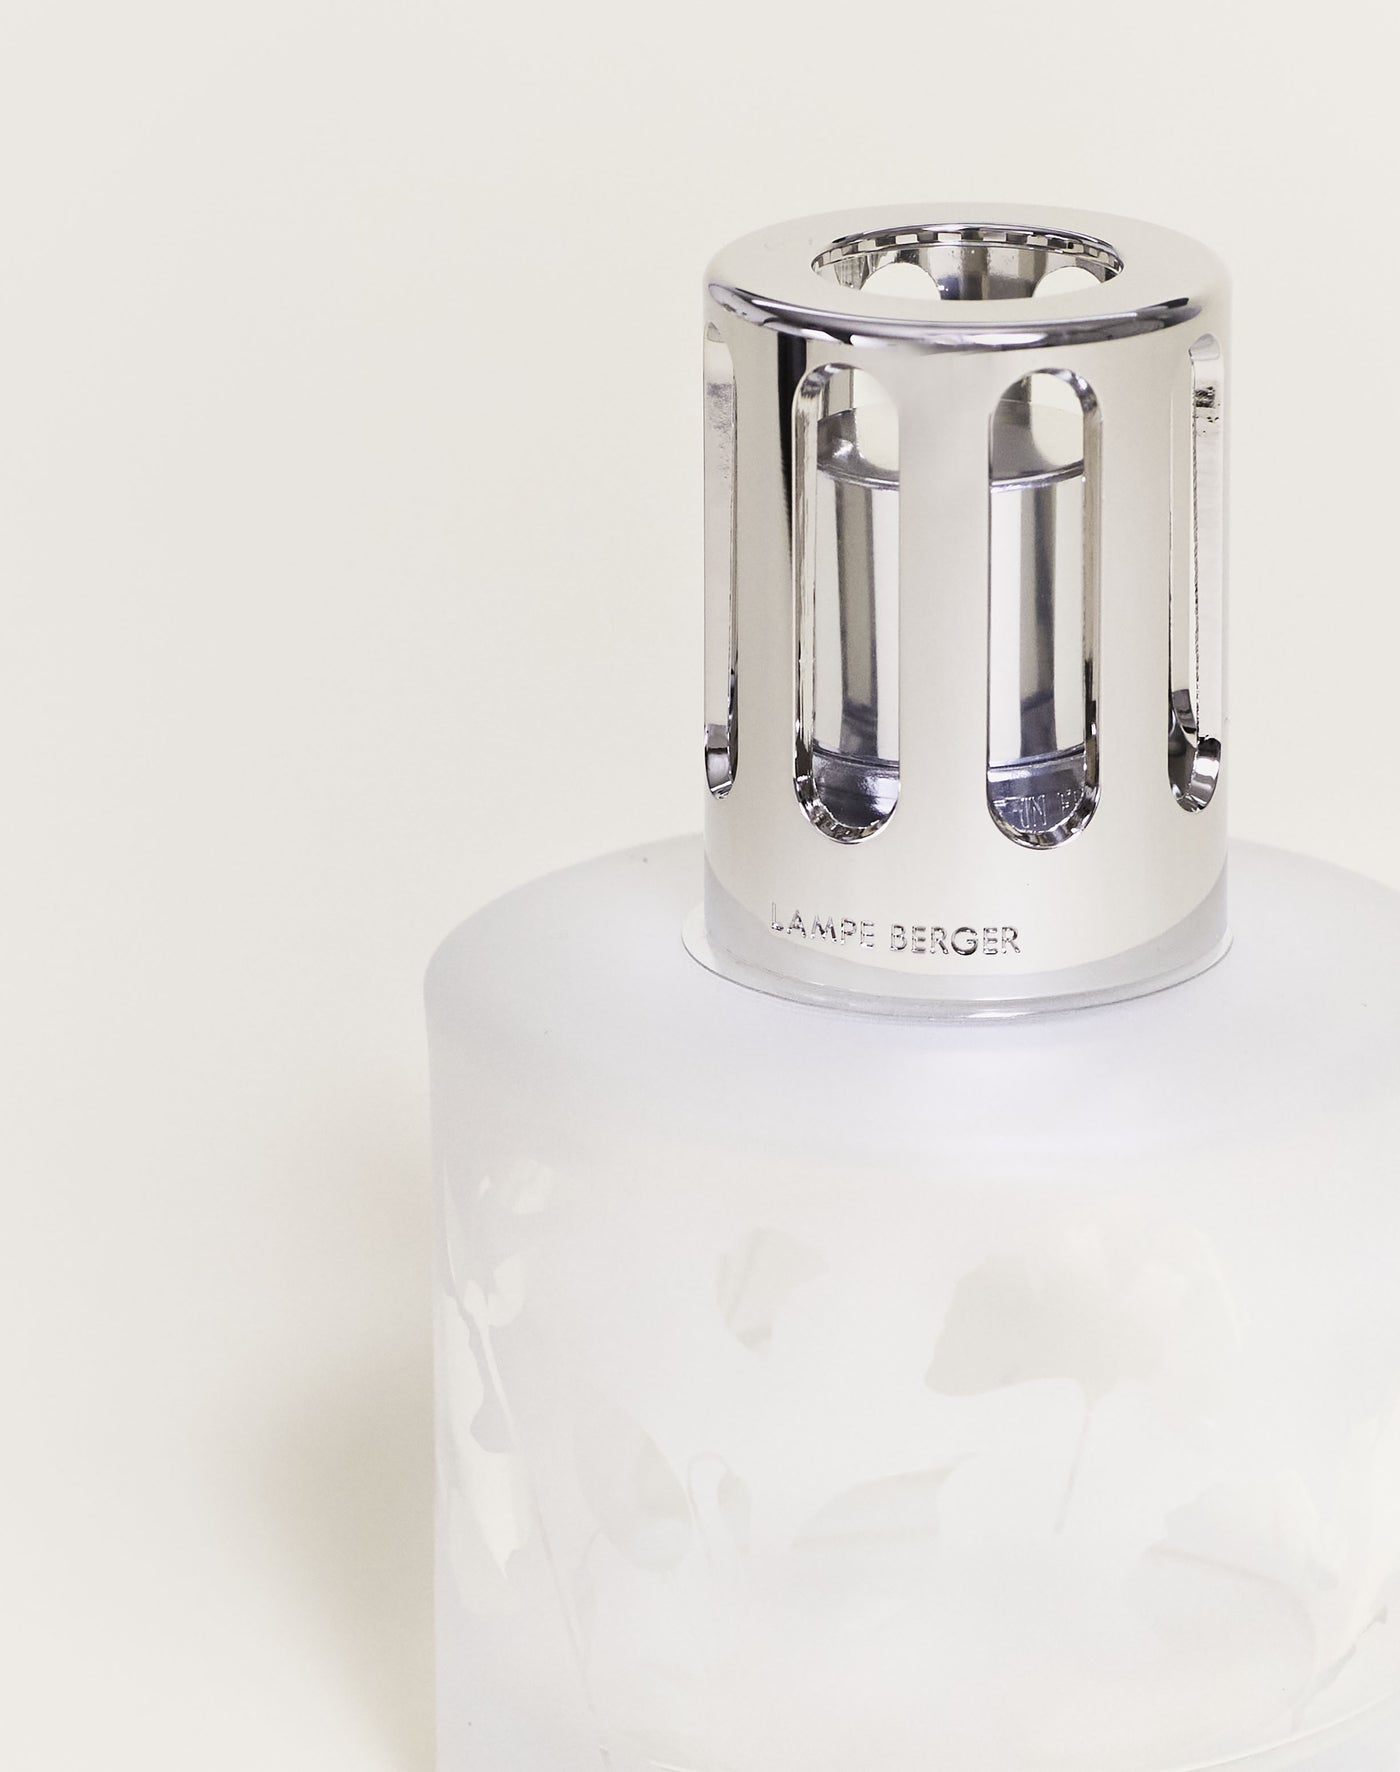 Aroma Energy Lamp Berger Gift Pack